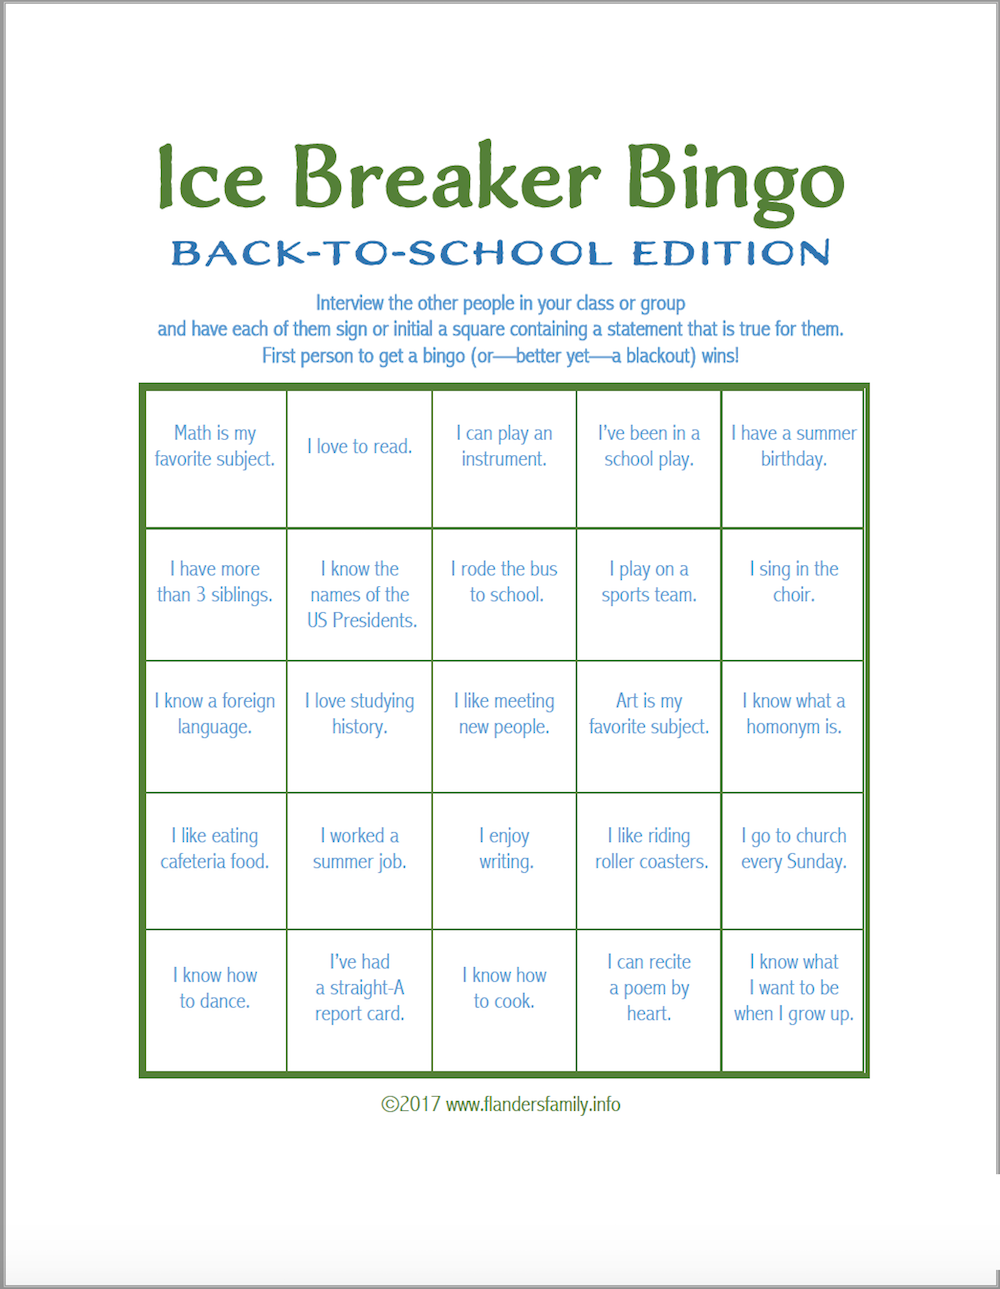 Ice Breaker Bingo BacktoSchool Version Flanders Family Homelife